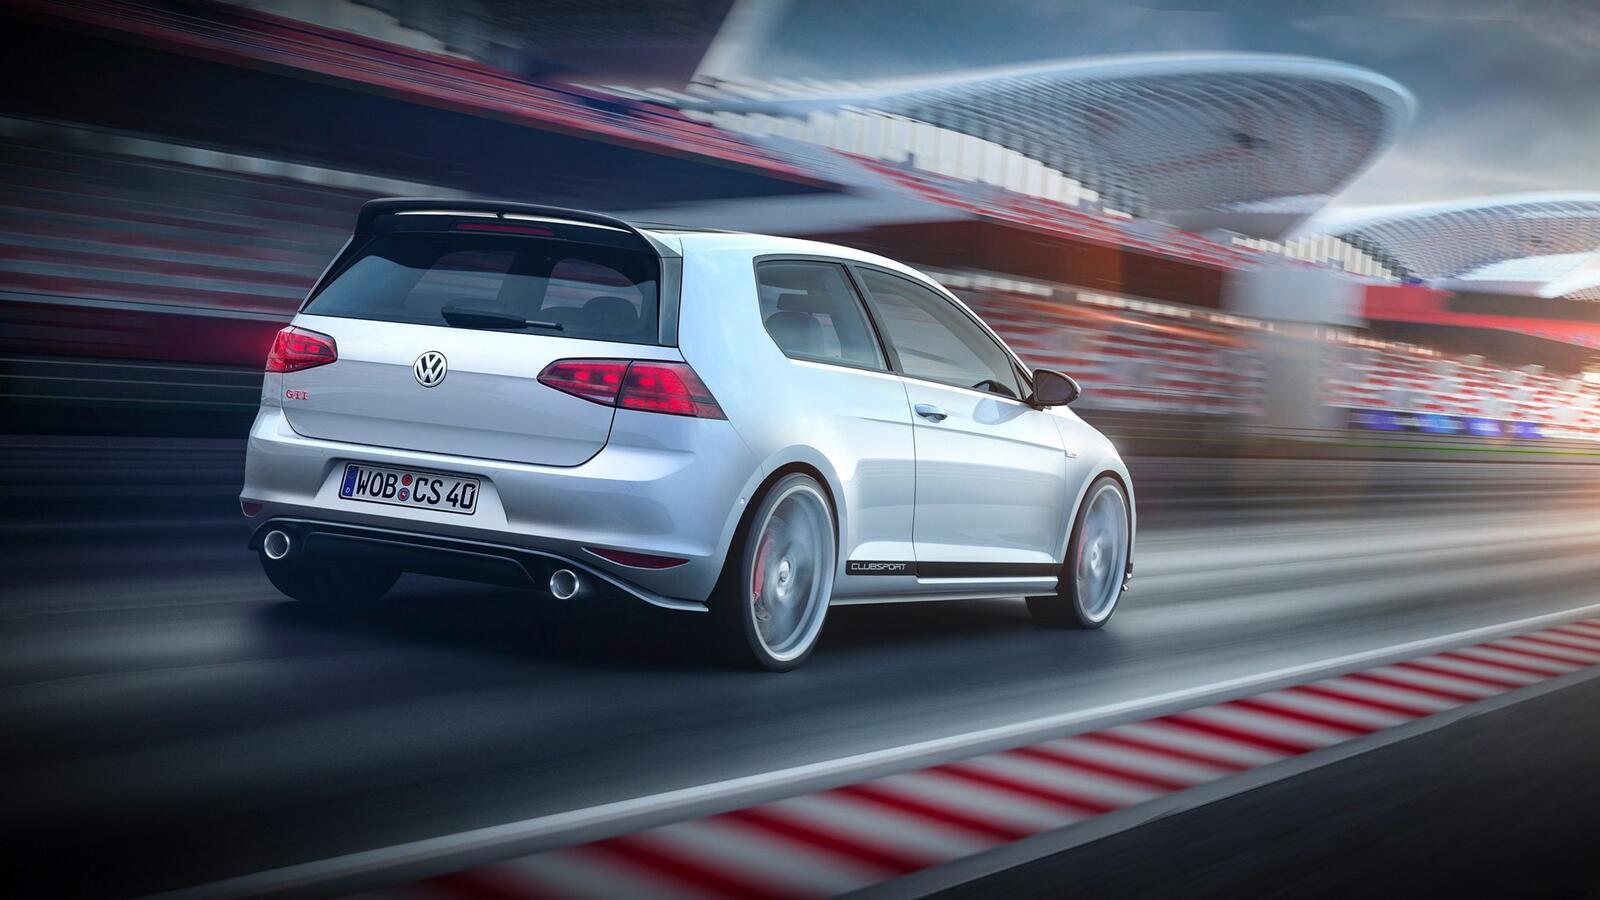 Wallpapers car Volkswagen motion blur on the desktop